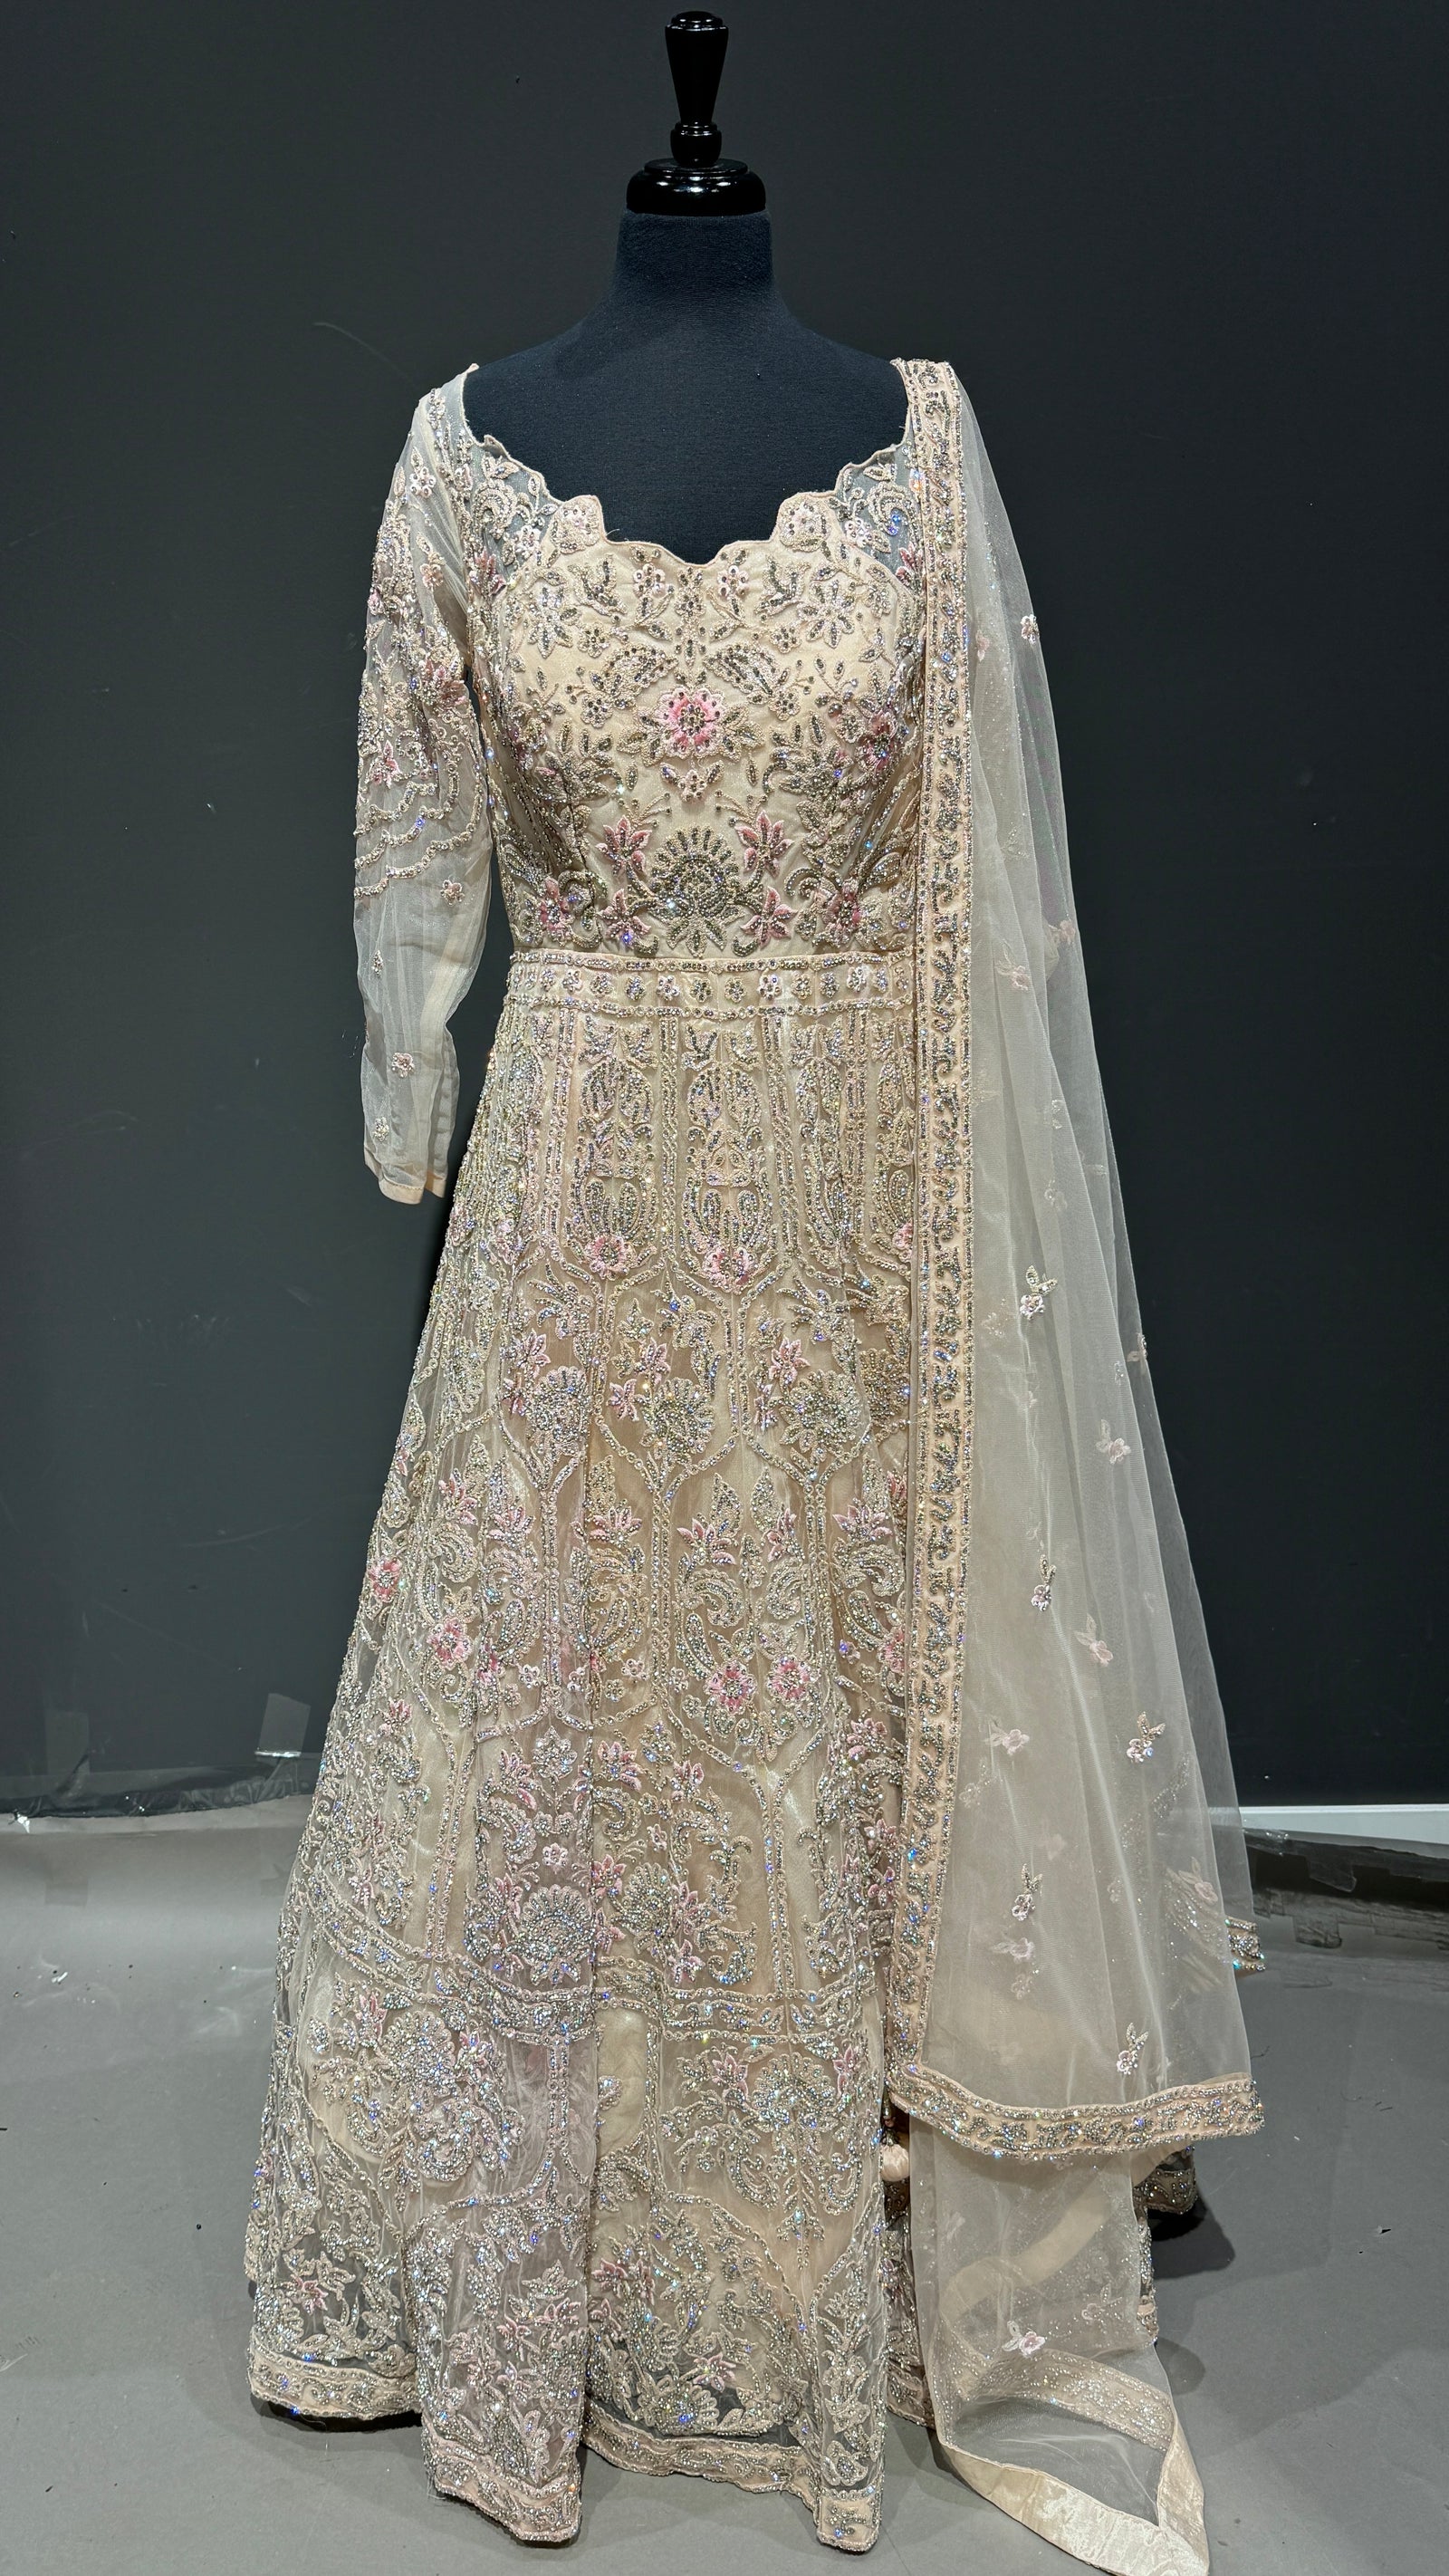 Buy Harpa Women's Cotton A-Line Standard Length Dress (GR6051_Pink_S) at